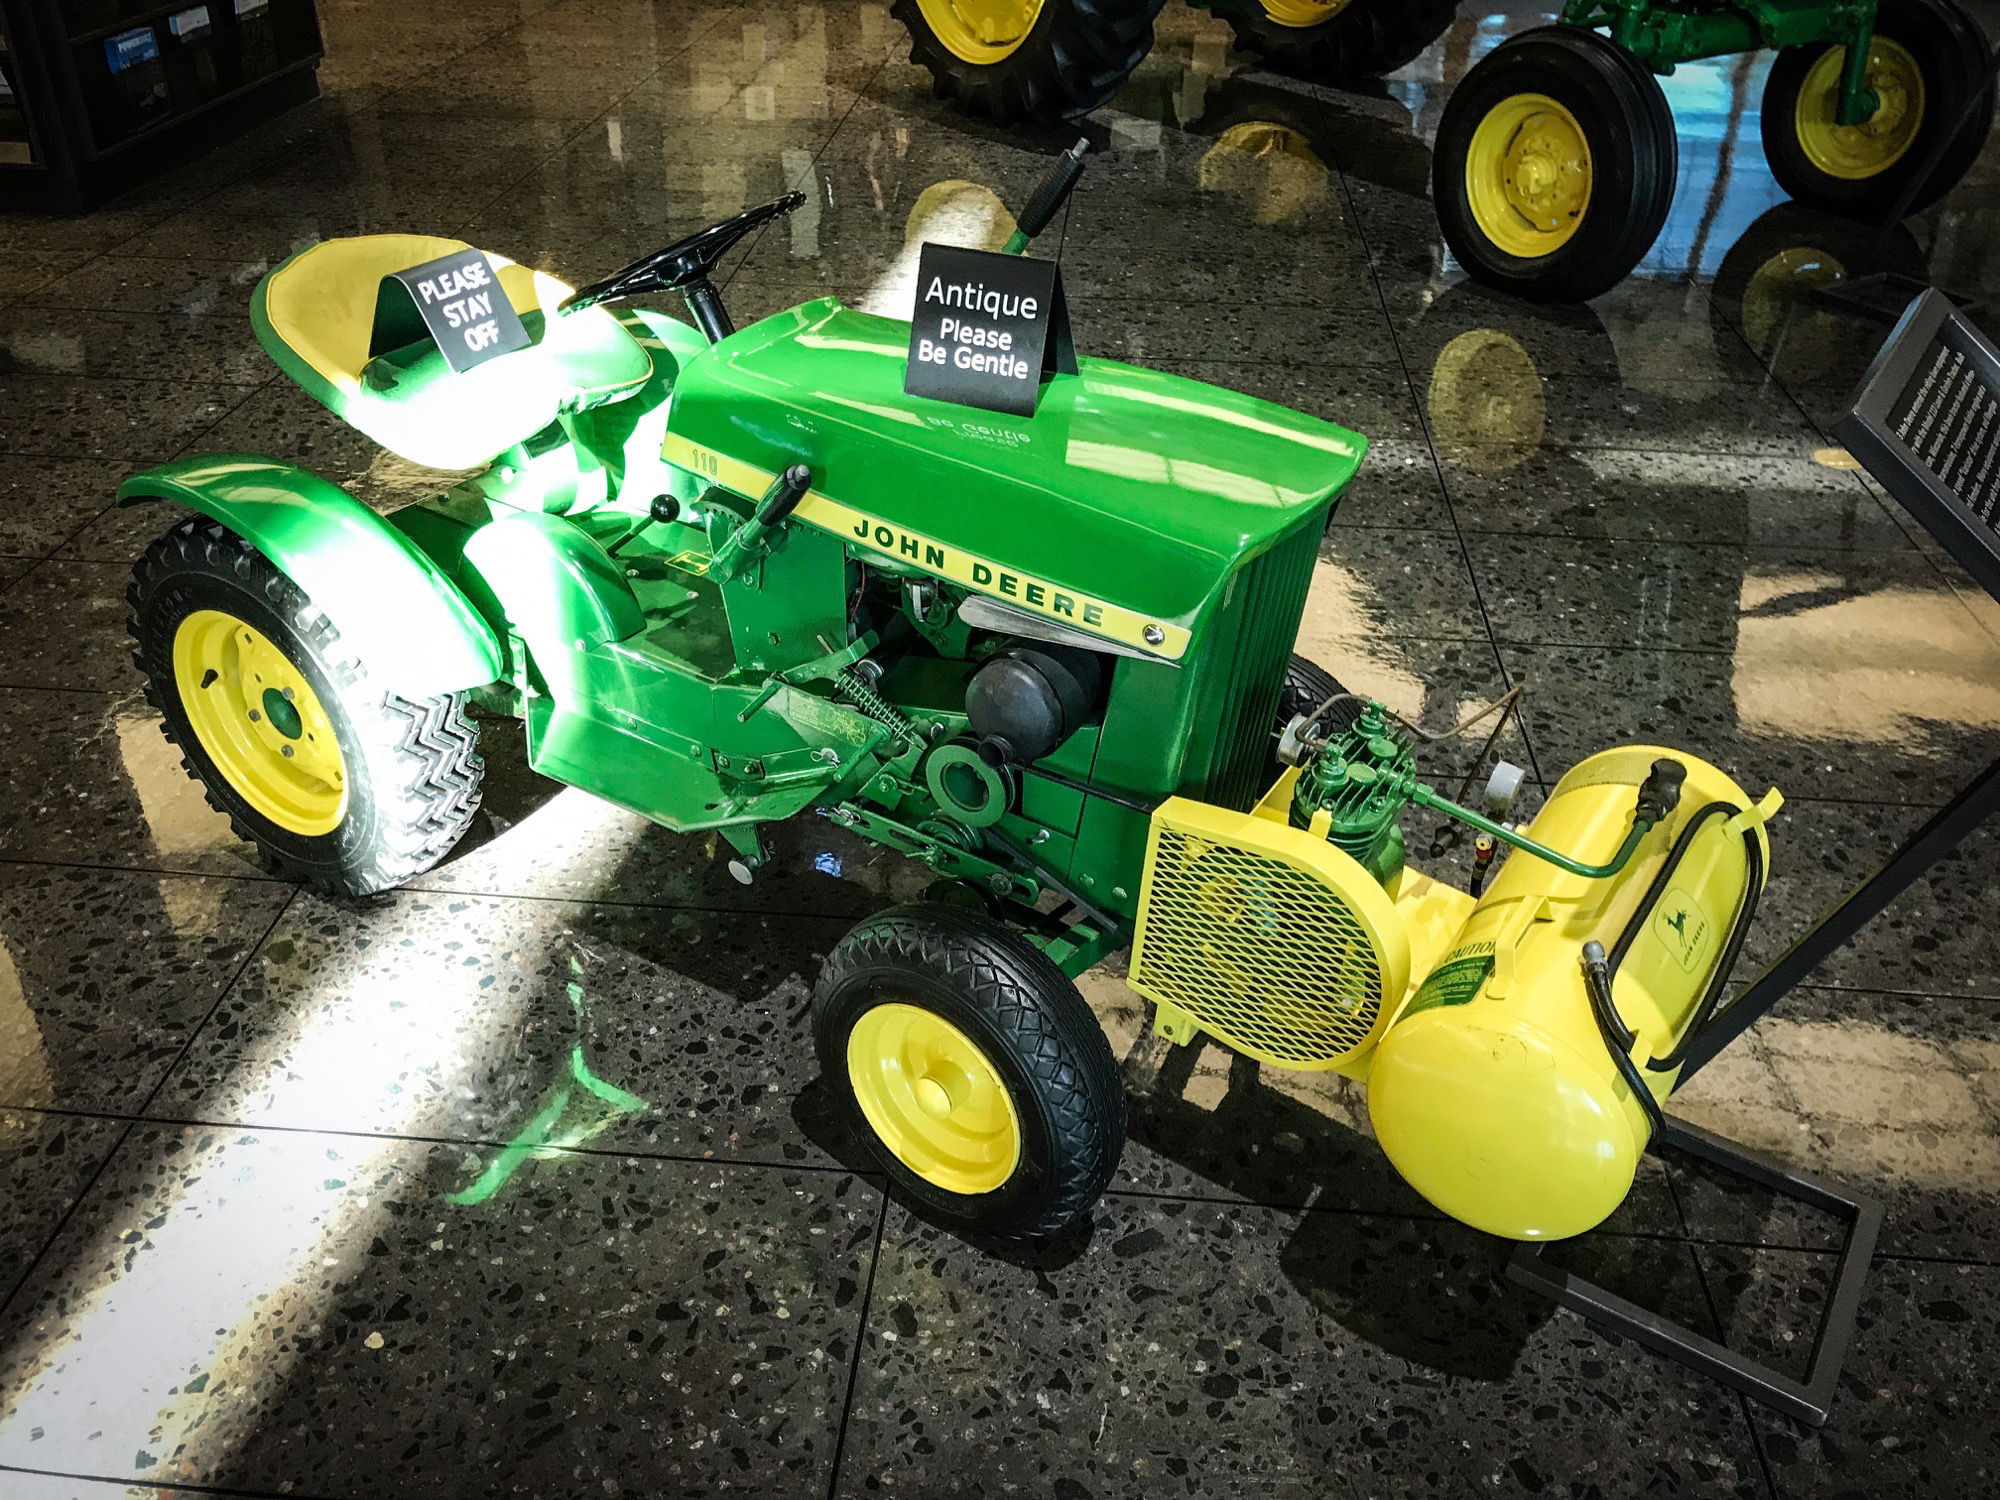 PHOTOS: Classic American machines on display at John Deere ...